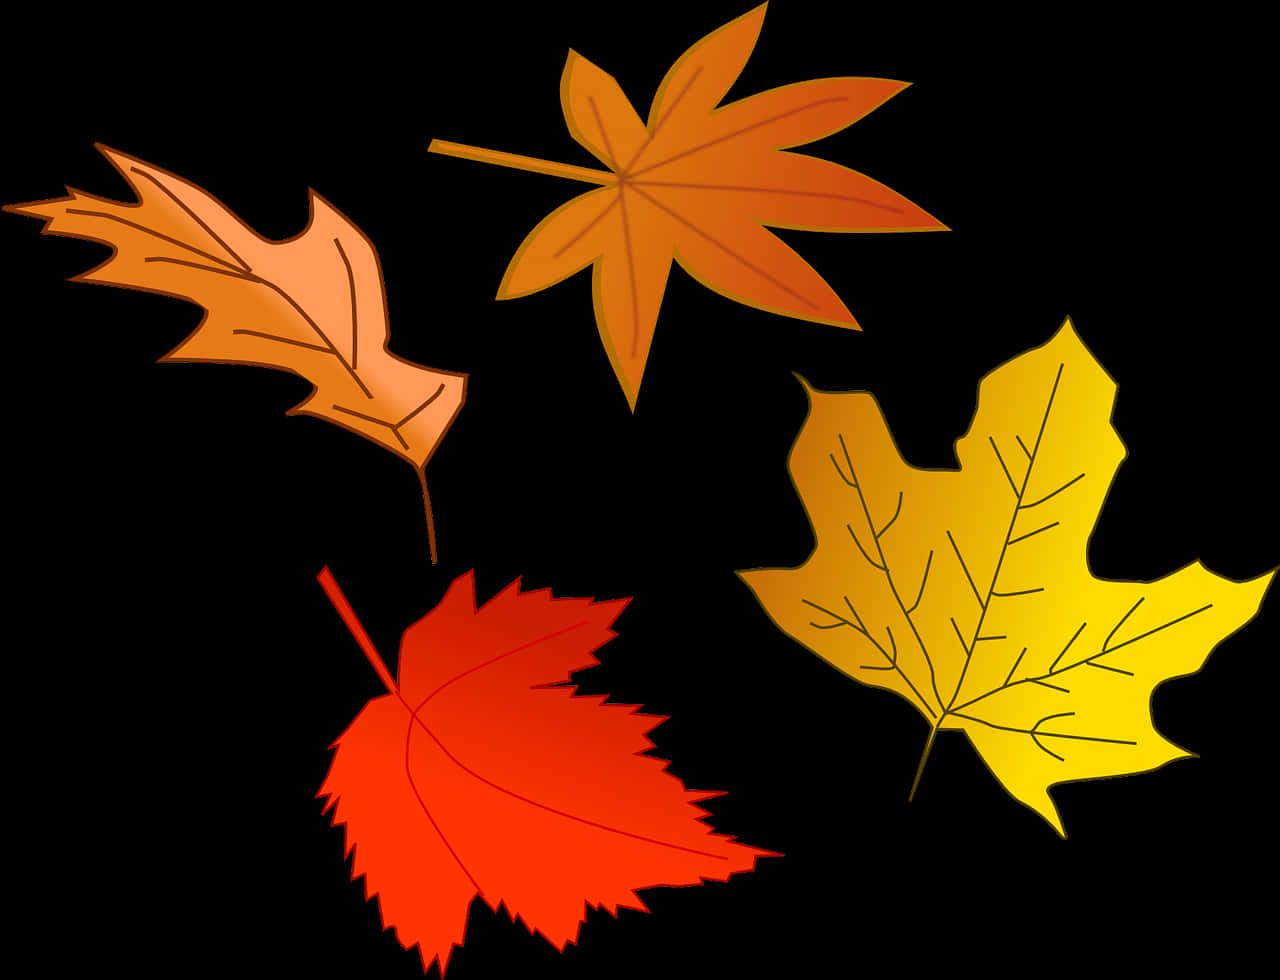 Autumn Leaves Vector Illustration